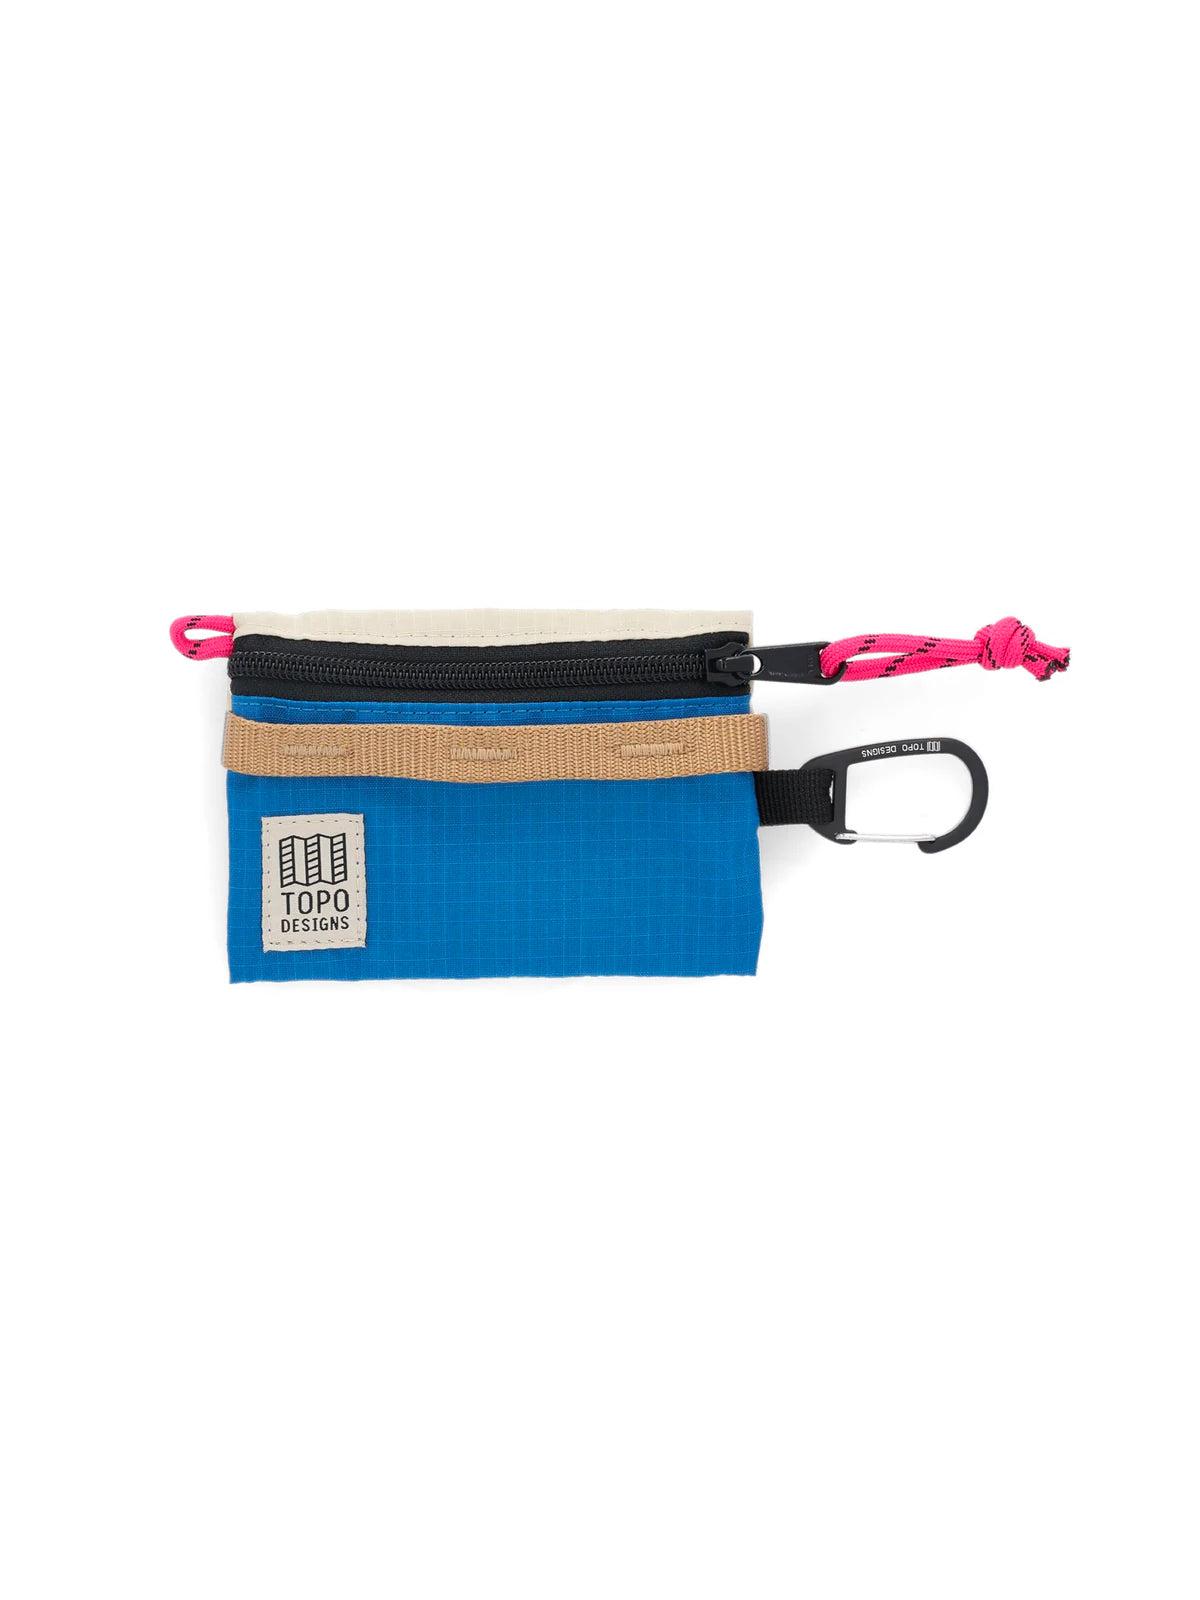 Topo Designs Mountain Accessory Bag